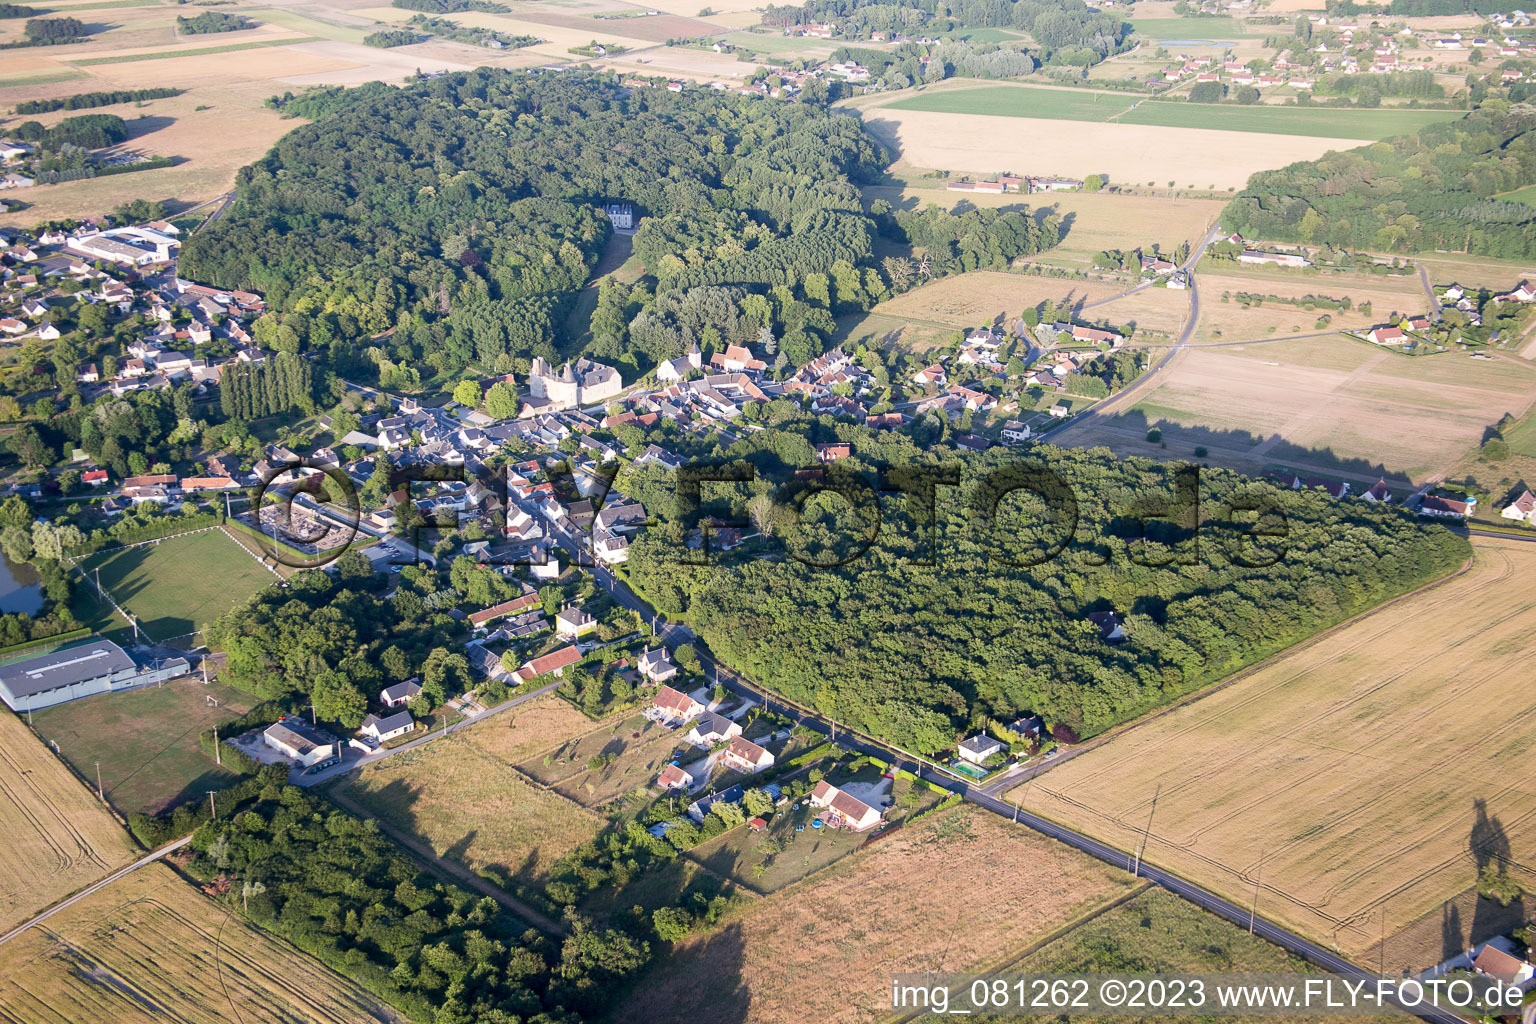 Luftbild von Fougères-sur-Bièvre im Bundesland Loir-et-Cher, Frankreich